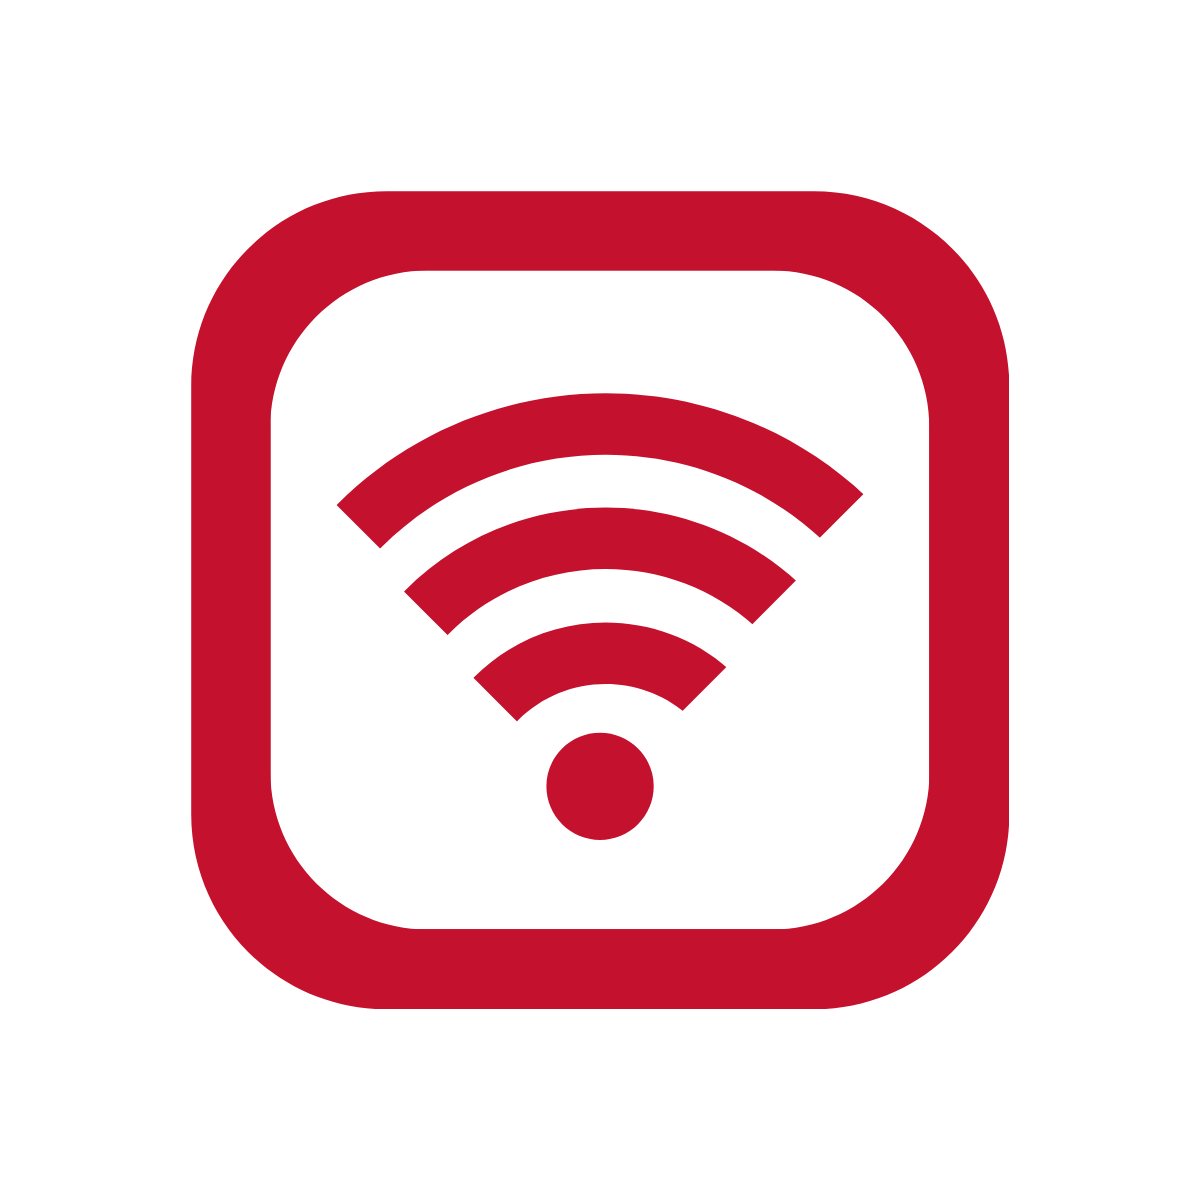 red wifi symbol in a square